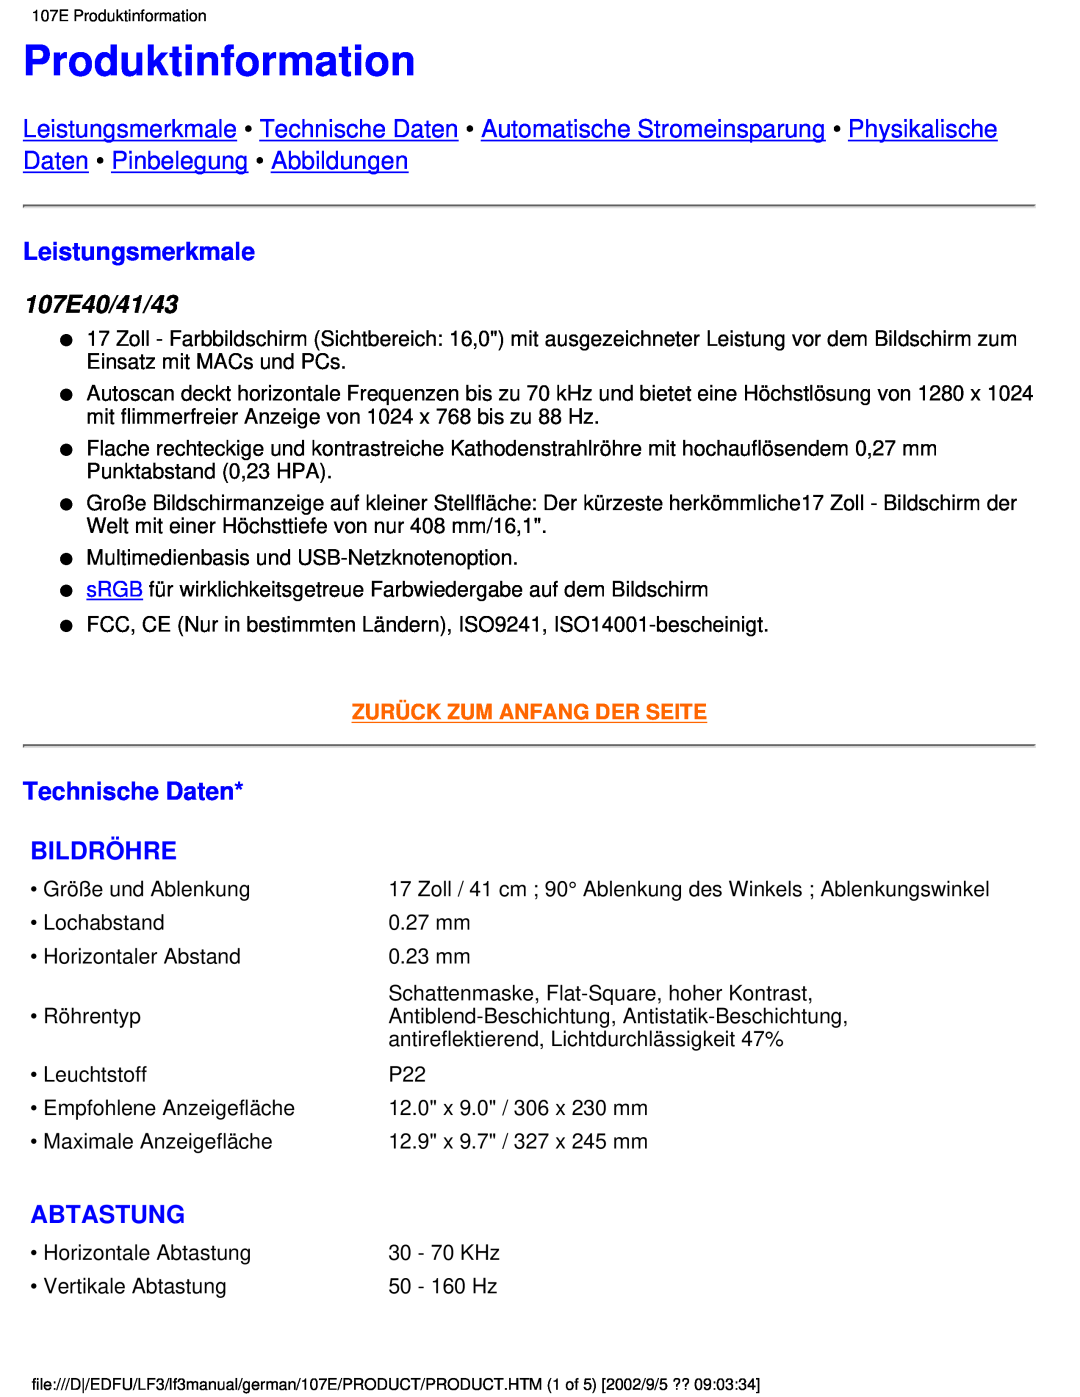 Philips user manual Produktinformation, Leistungsmerkmale, 107E40/41/43, Technische Daten, Bildröhre, Abtastung 